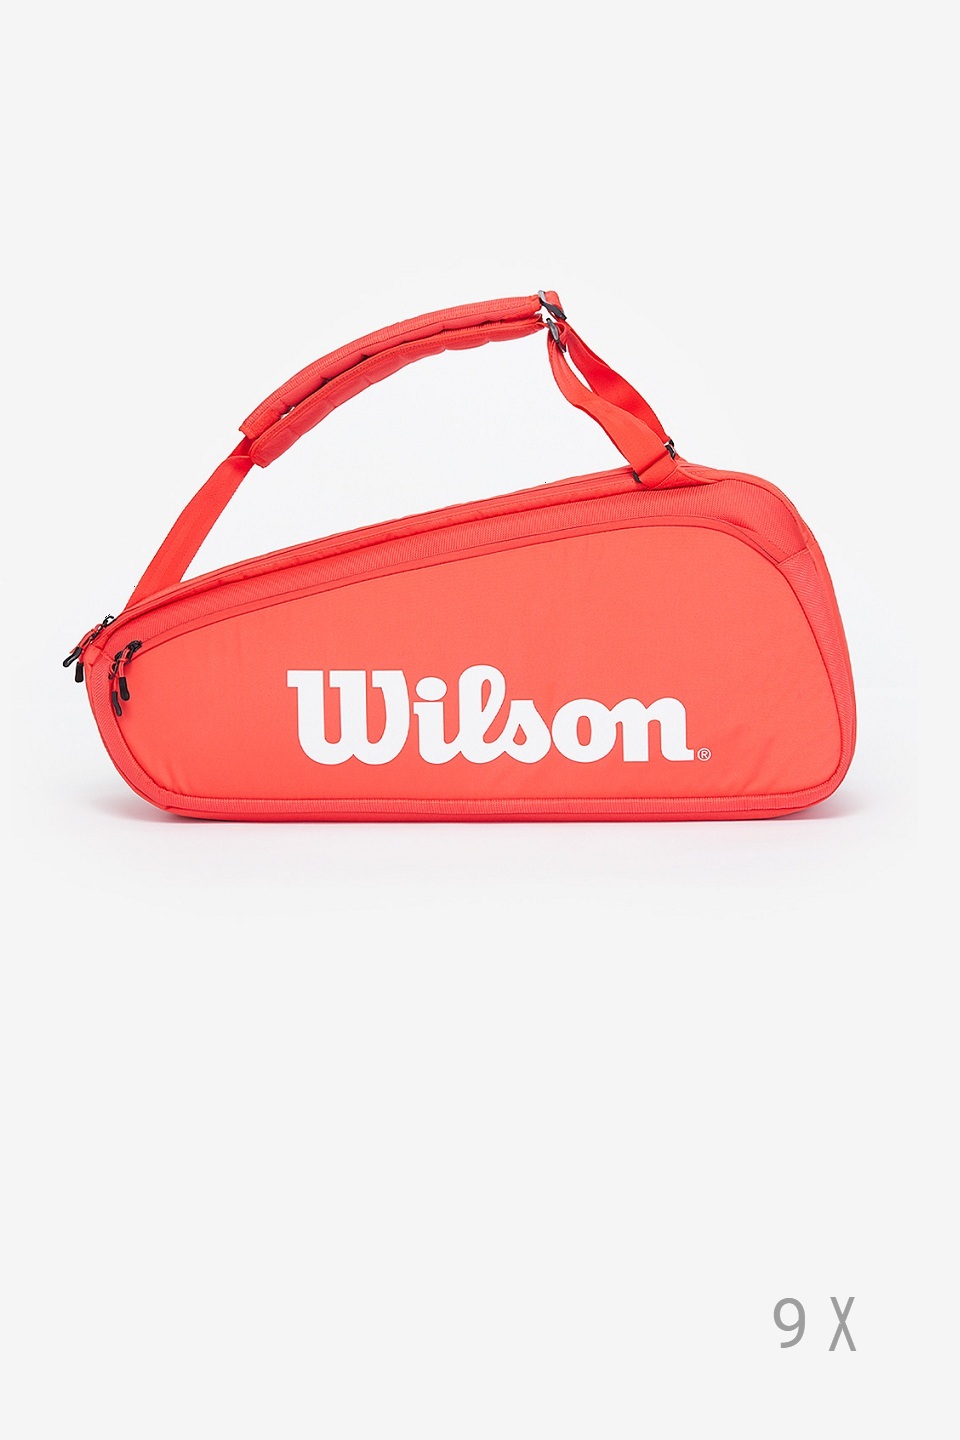 WİLSON - Wilson Super Tour Pro Staff 9 Pack Tennis Bag Kırmızı